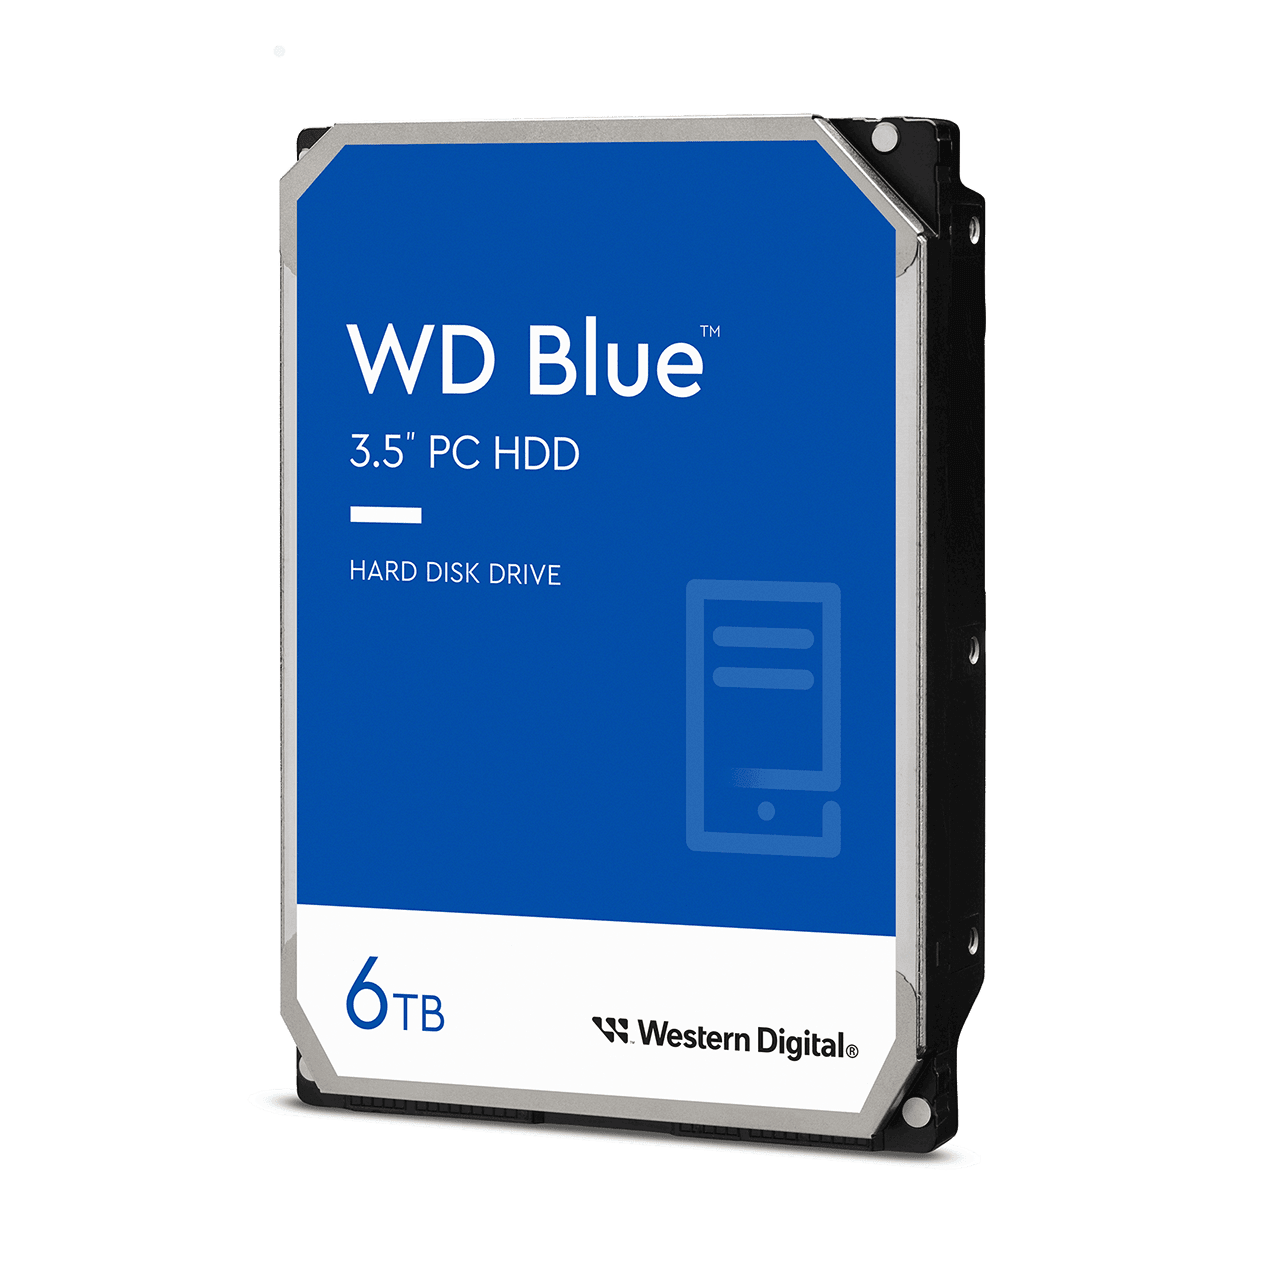 WD Blue 3.5in PC Hard Drive - 6TB - Image13